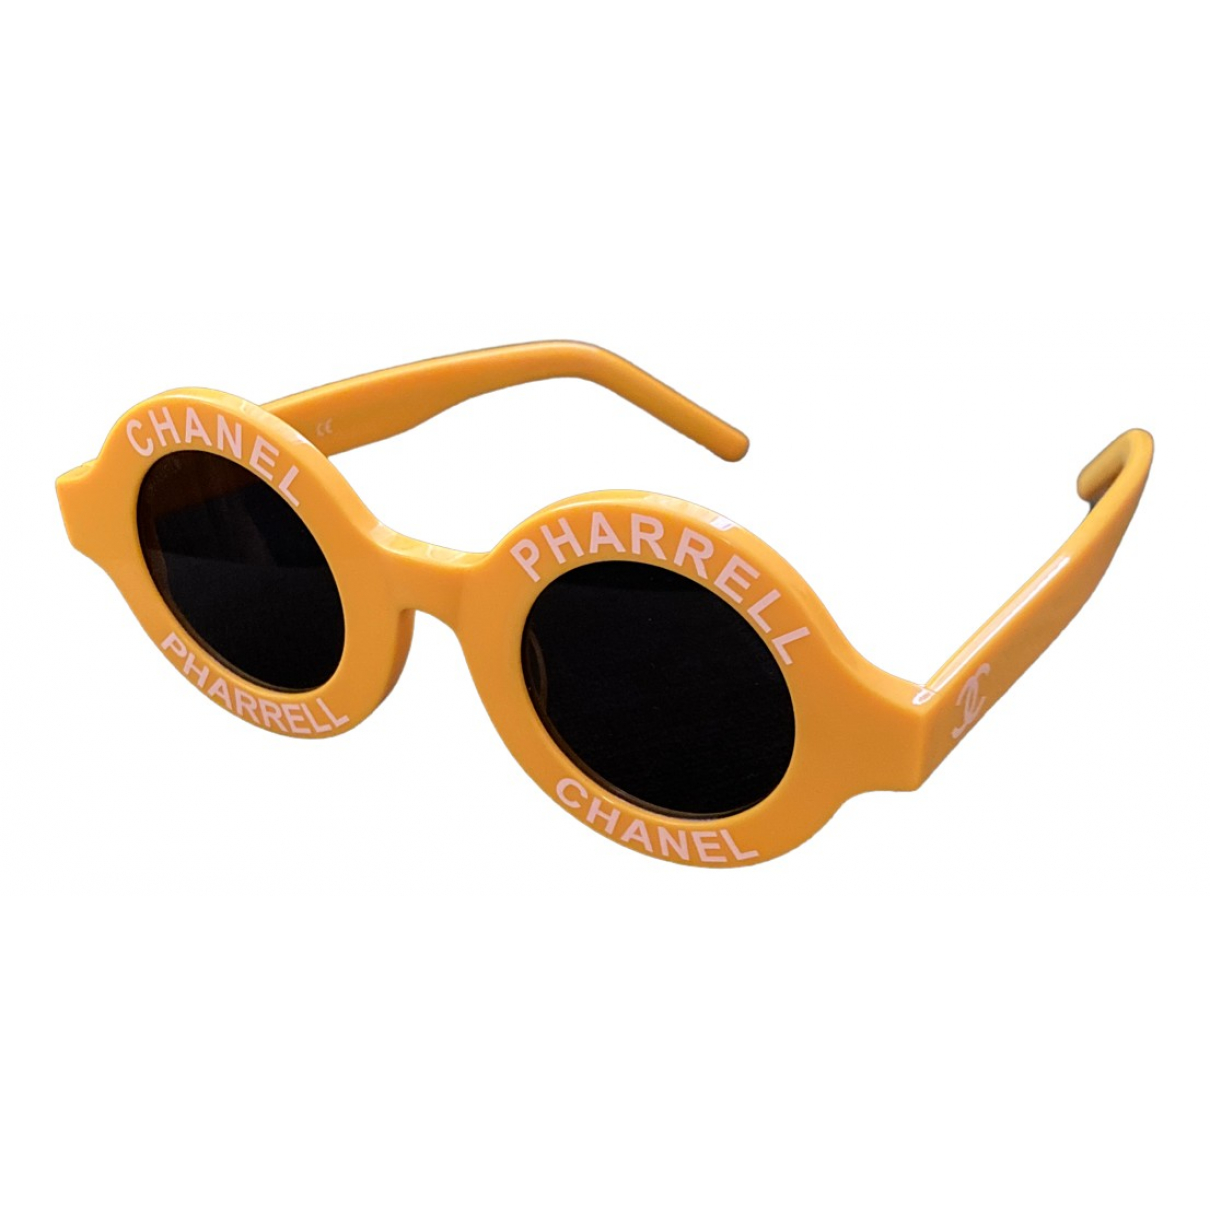 Sunglasses - Chanel x Pharrell Williams - Modalova